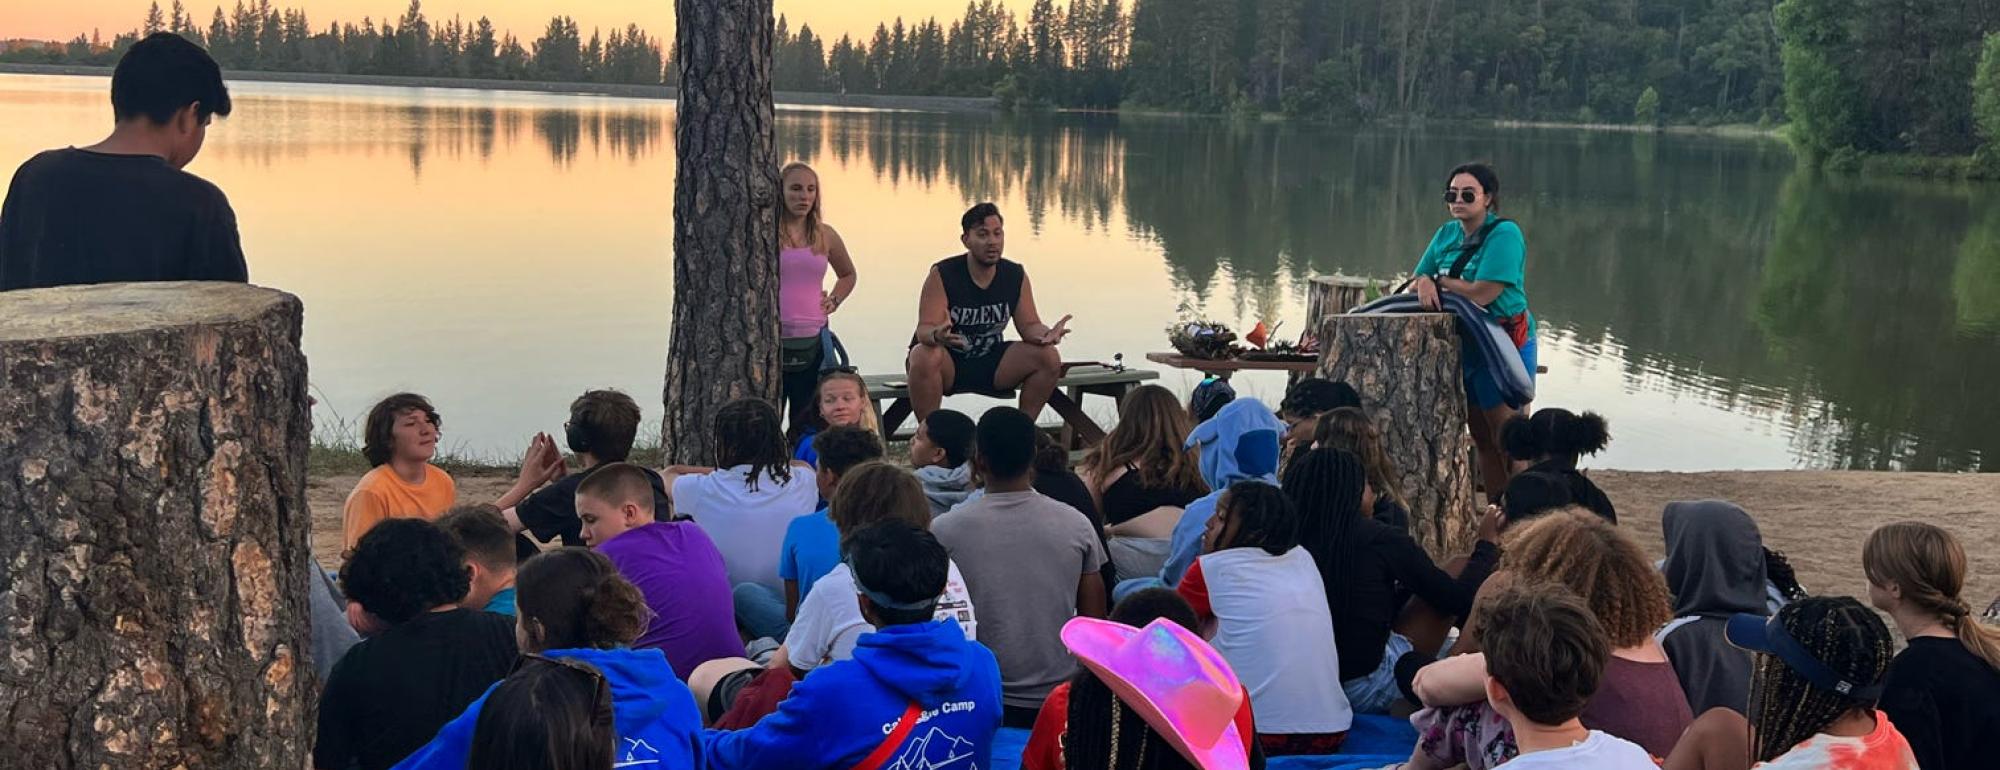 Campers outside at lake at sunset